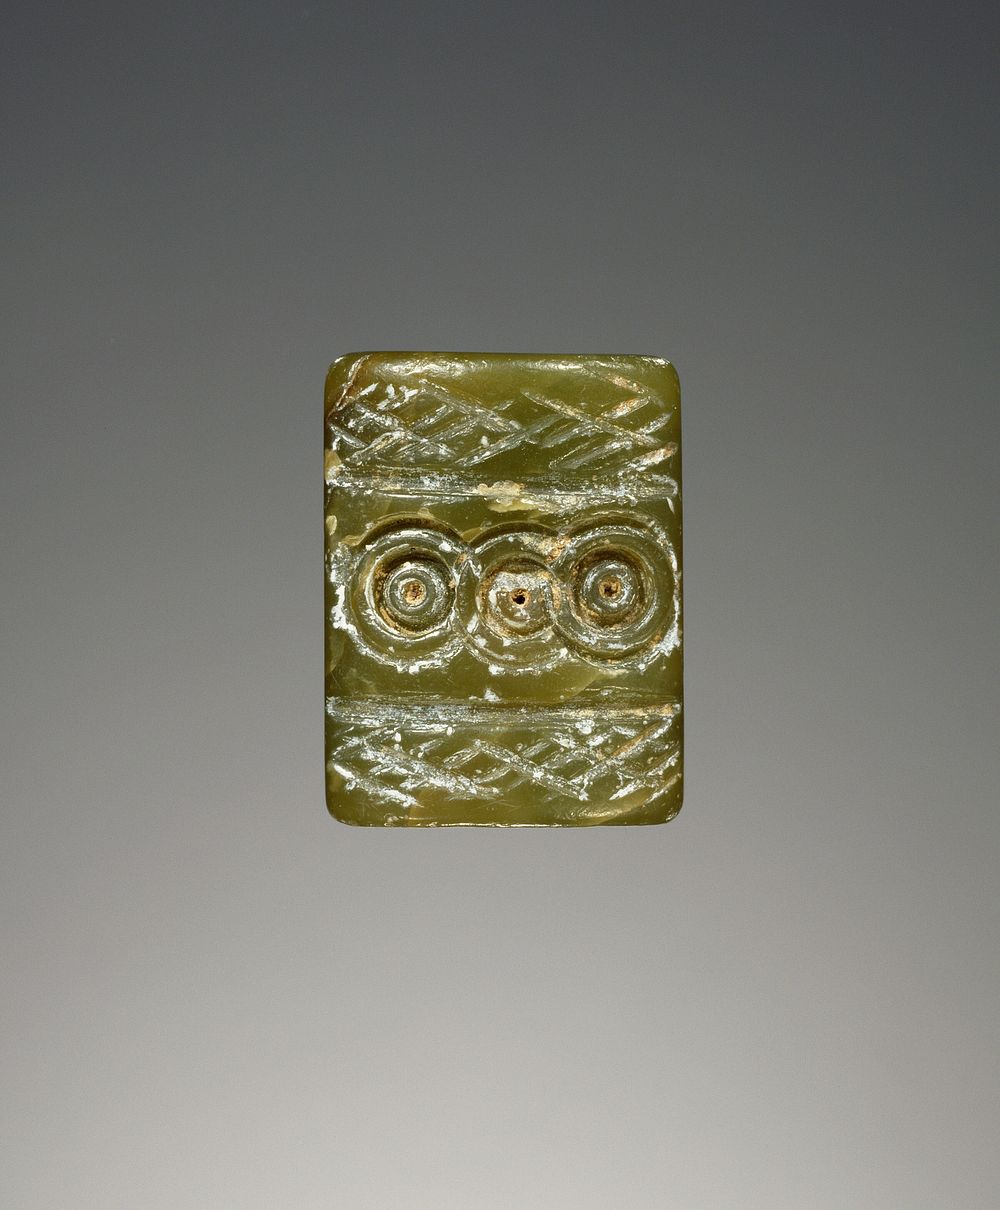 Cushion-shaped engraved seal